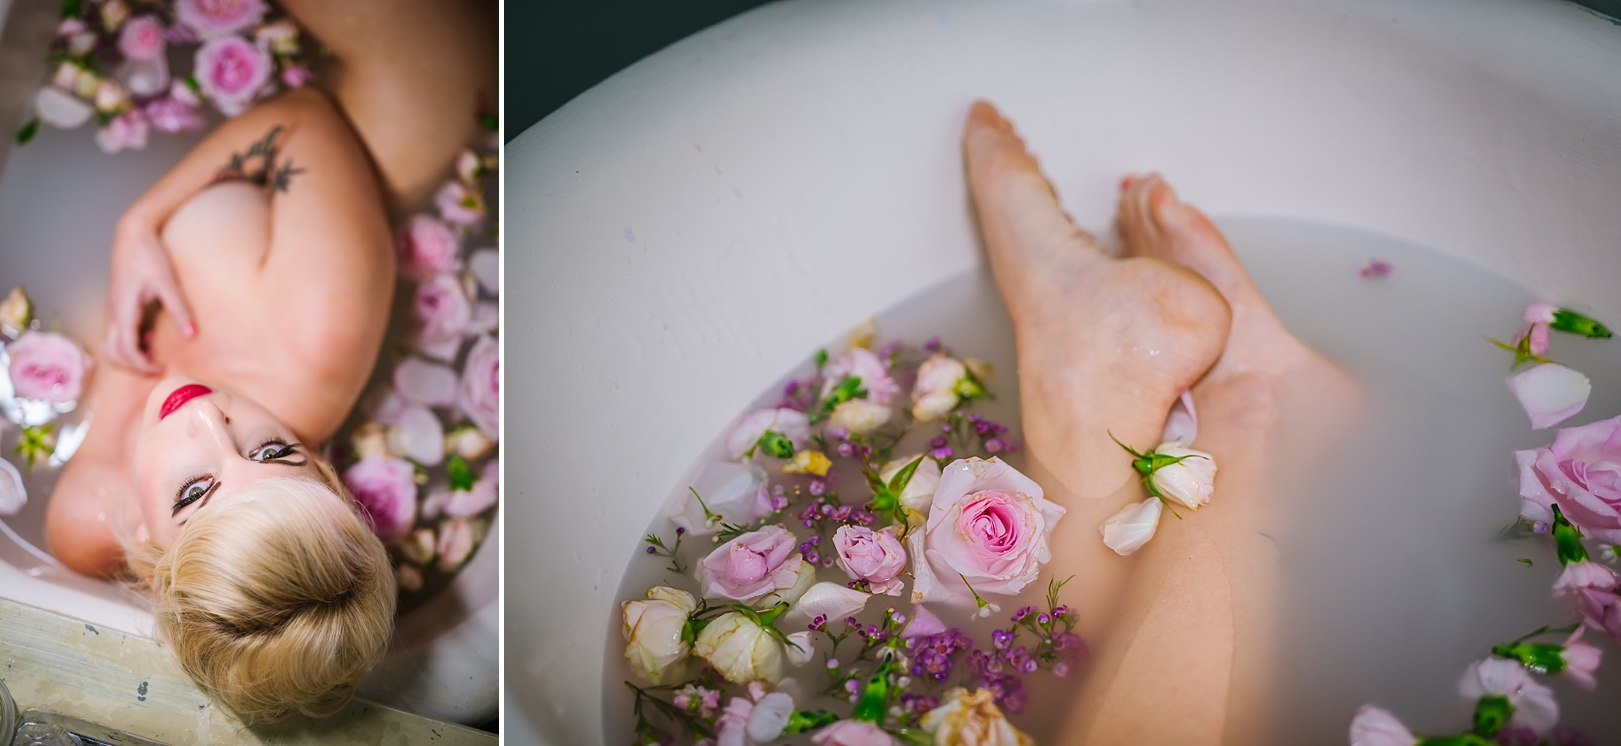 creative-hipster-boudoir-photos-tampa-studio-flowers-bathtub_0013.jpg